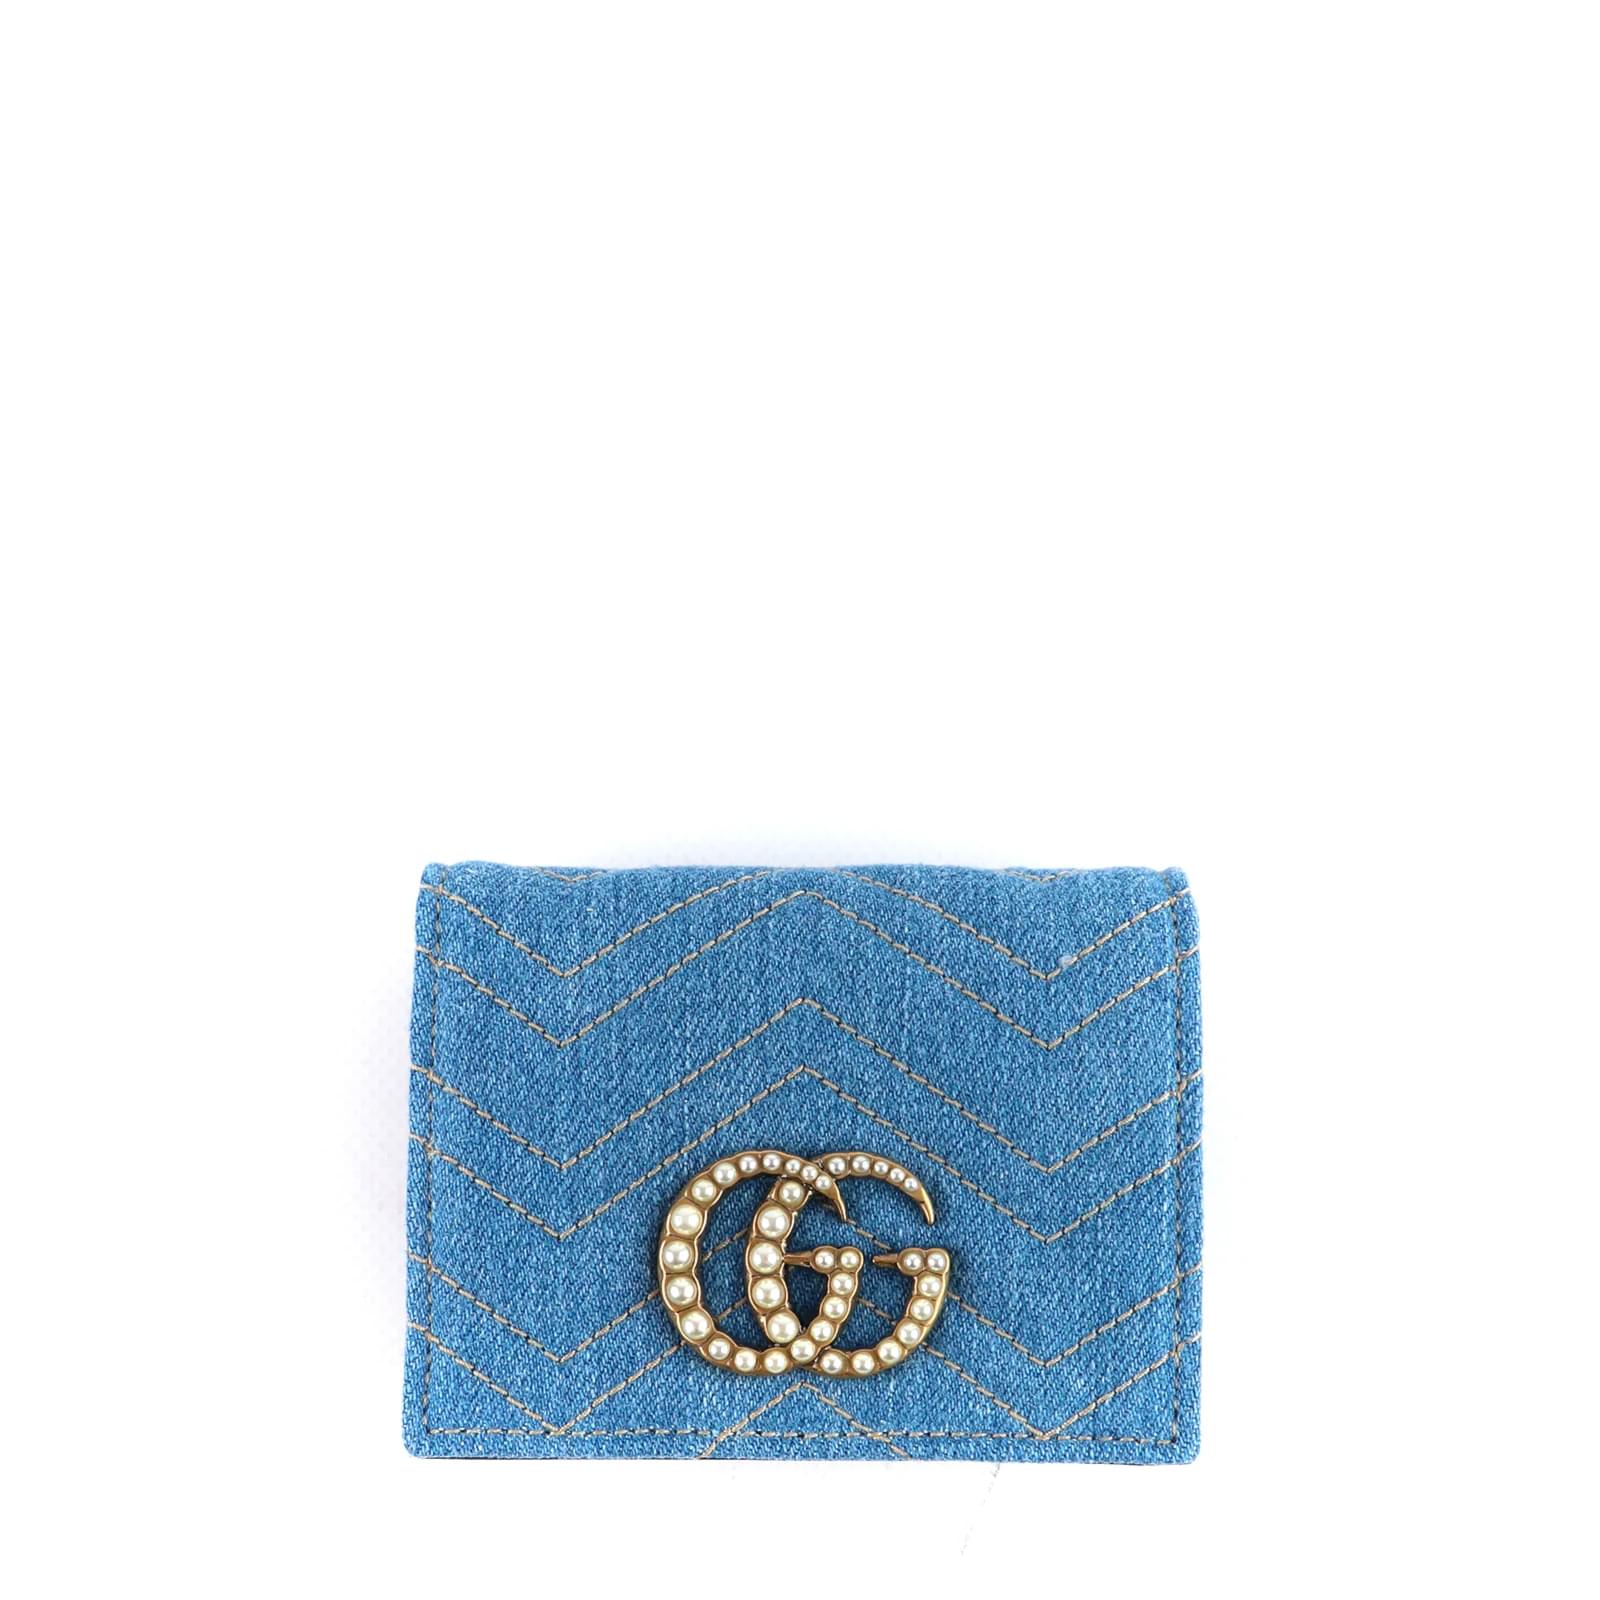 Gucci Marmont Shoulder bag in Blue Denim - Jeans Gucci